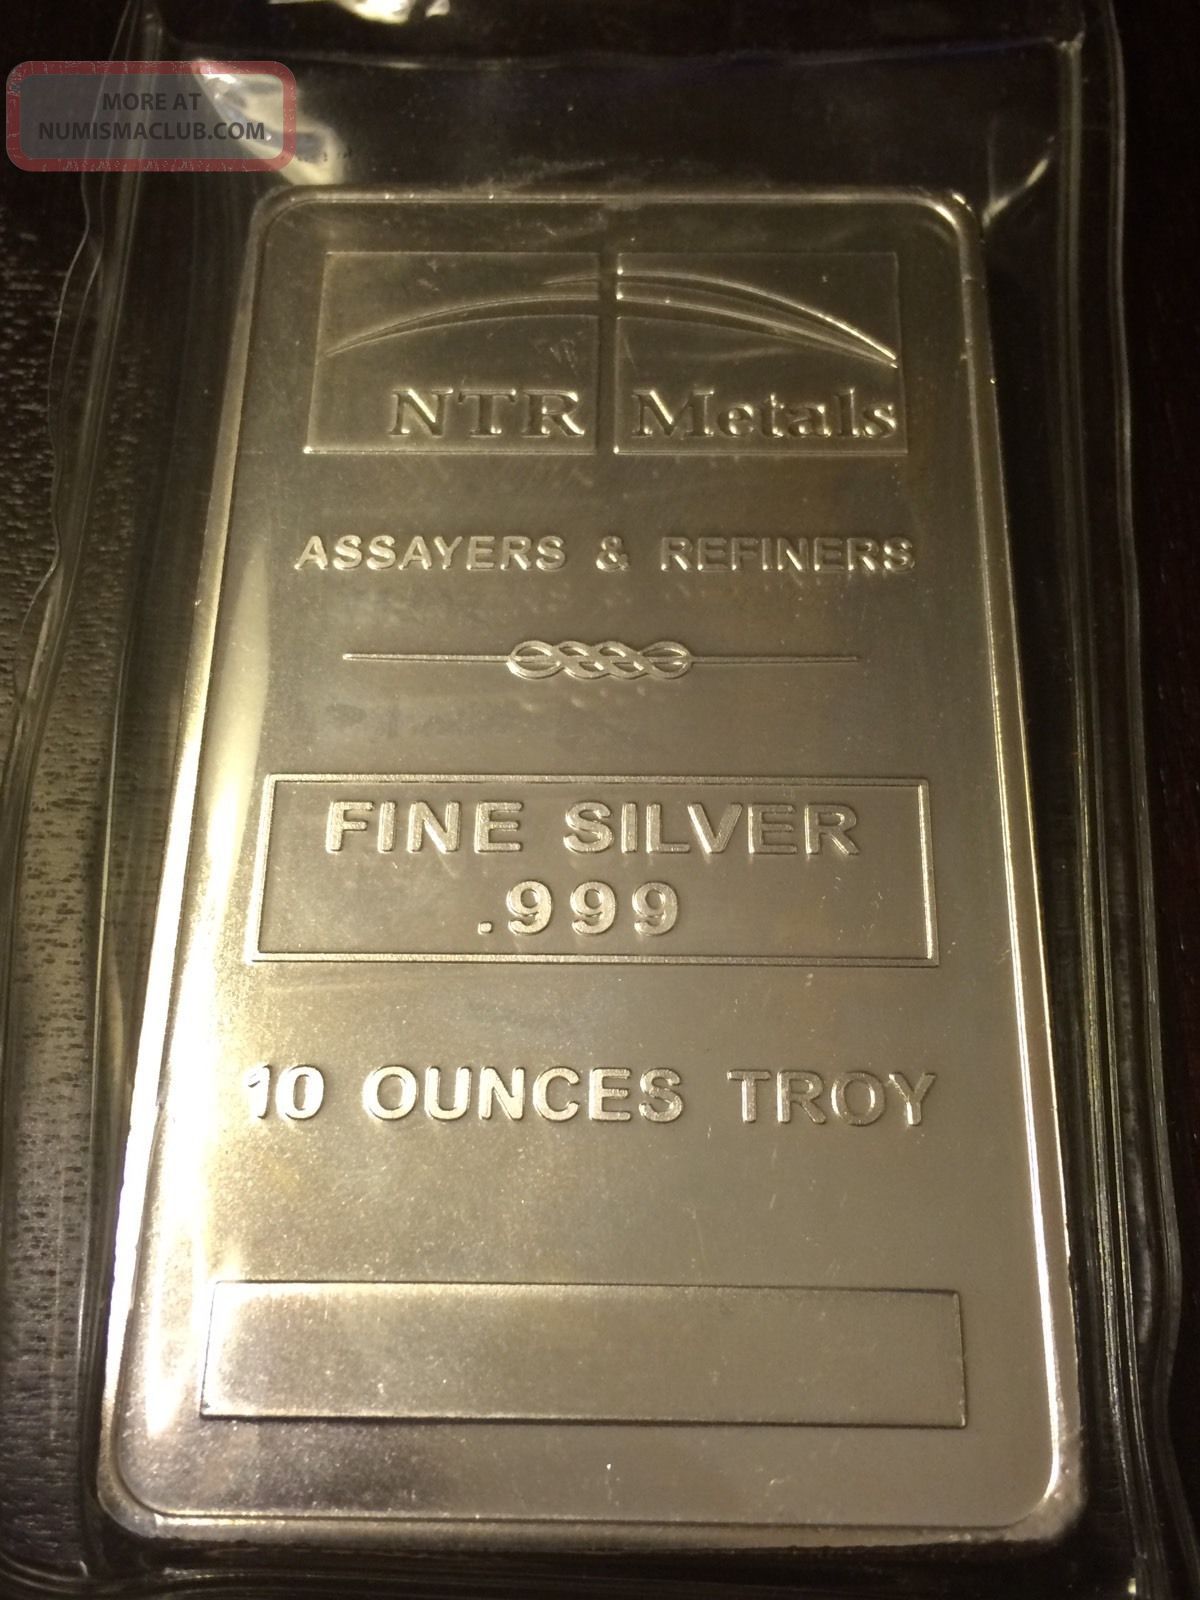 10 Oz Silver Bar Ntr Metals. 999 Fine Silver